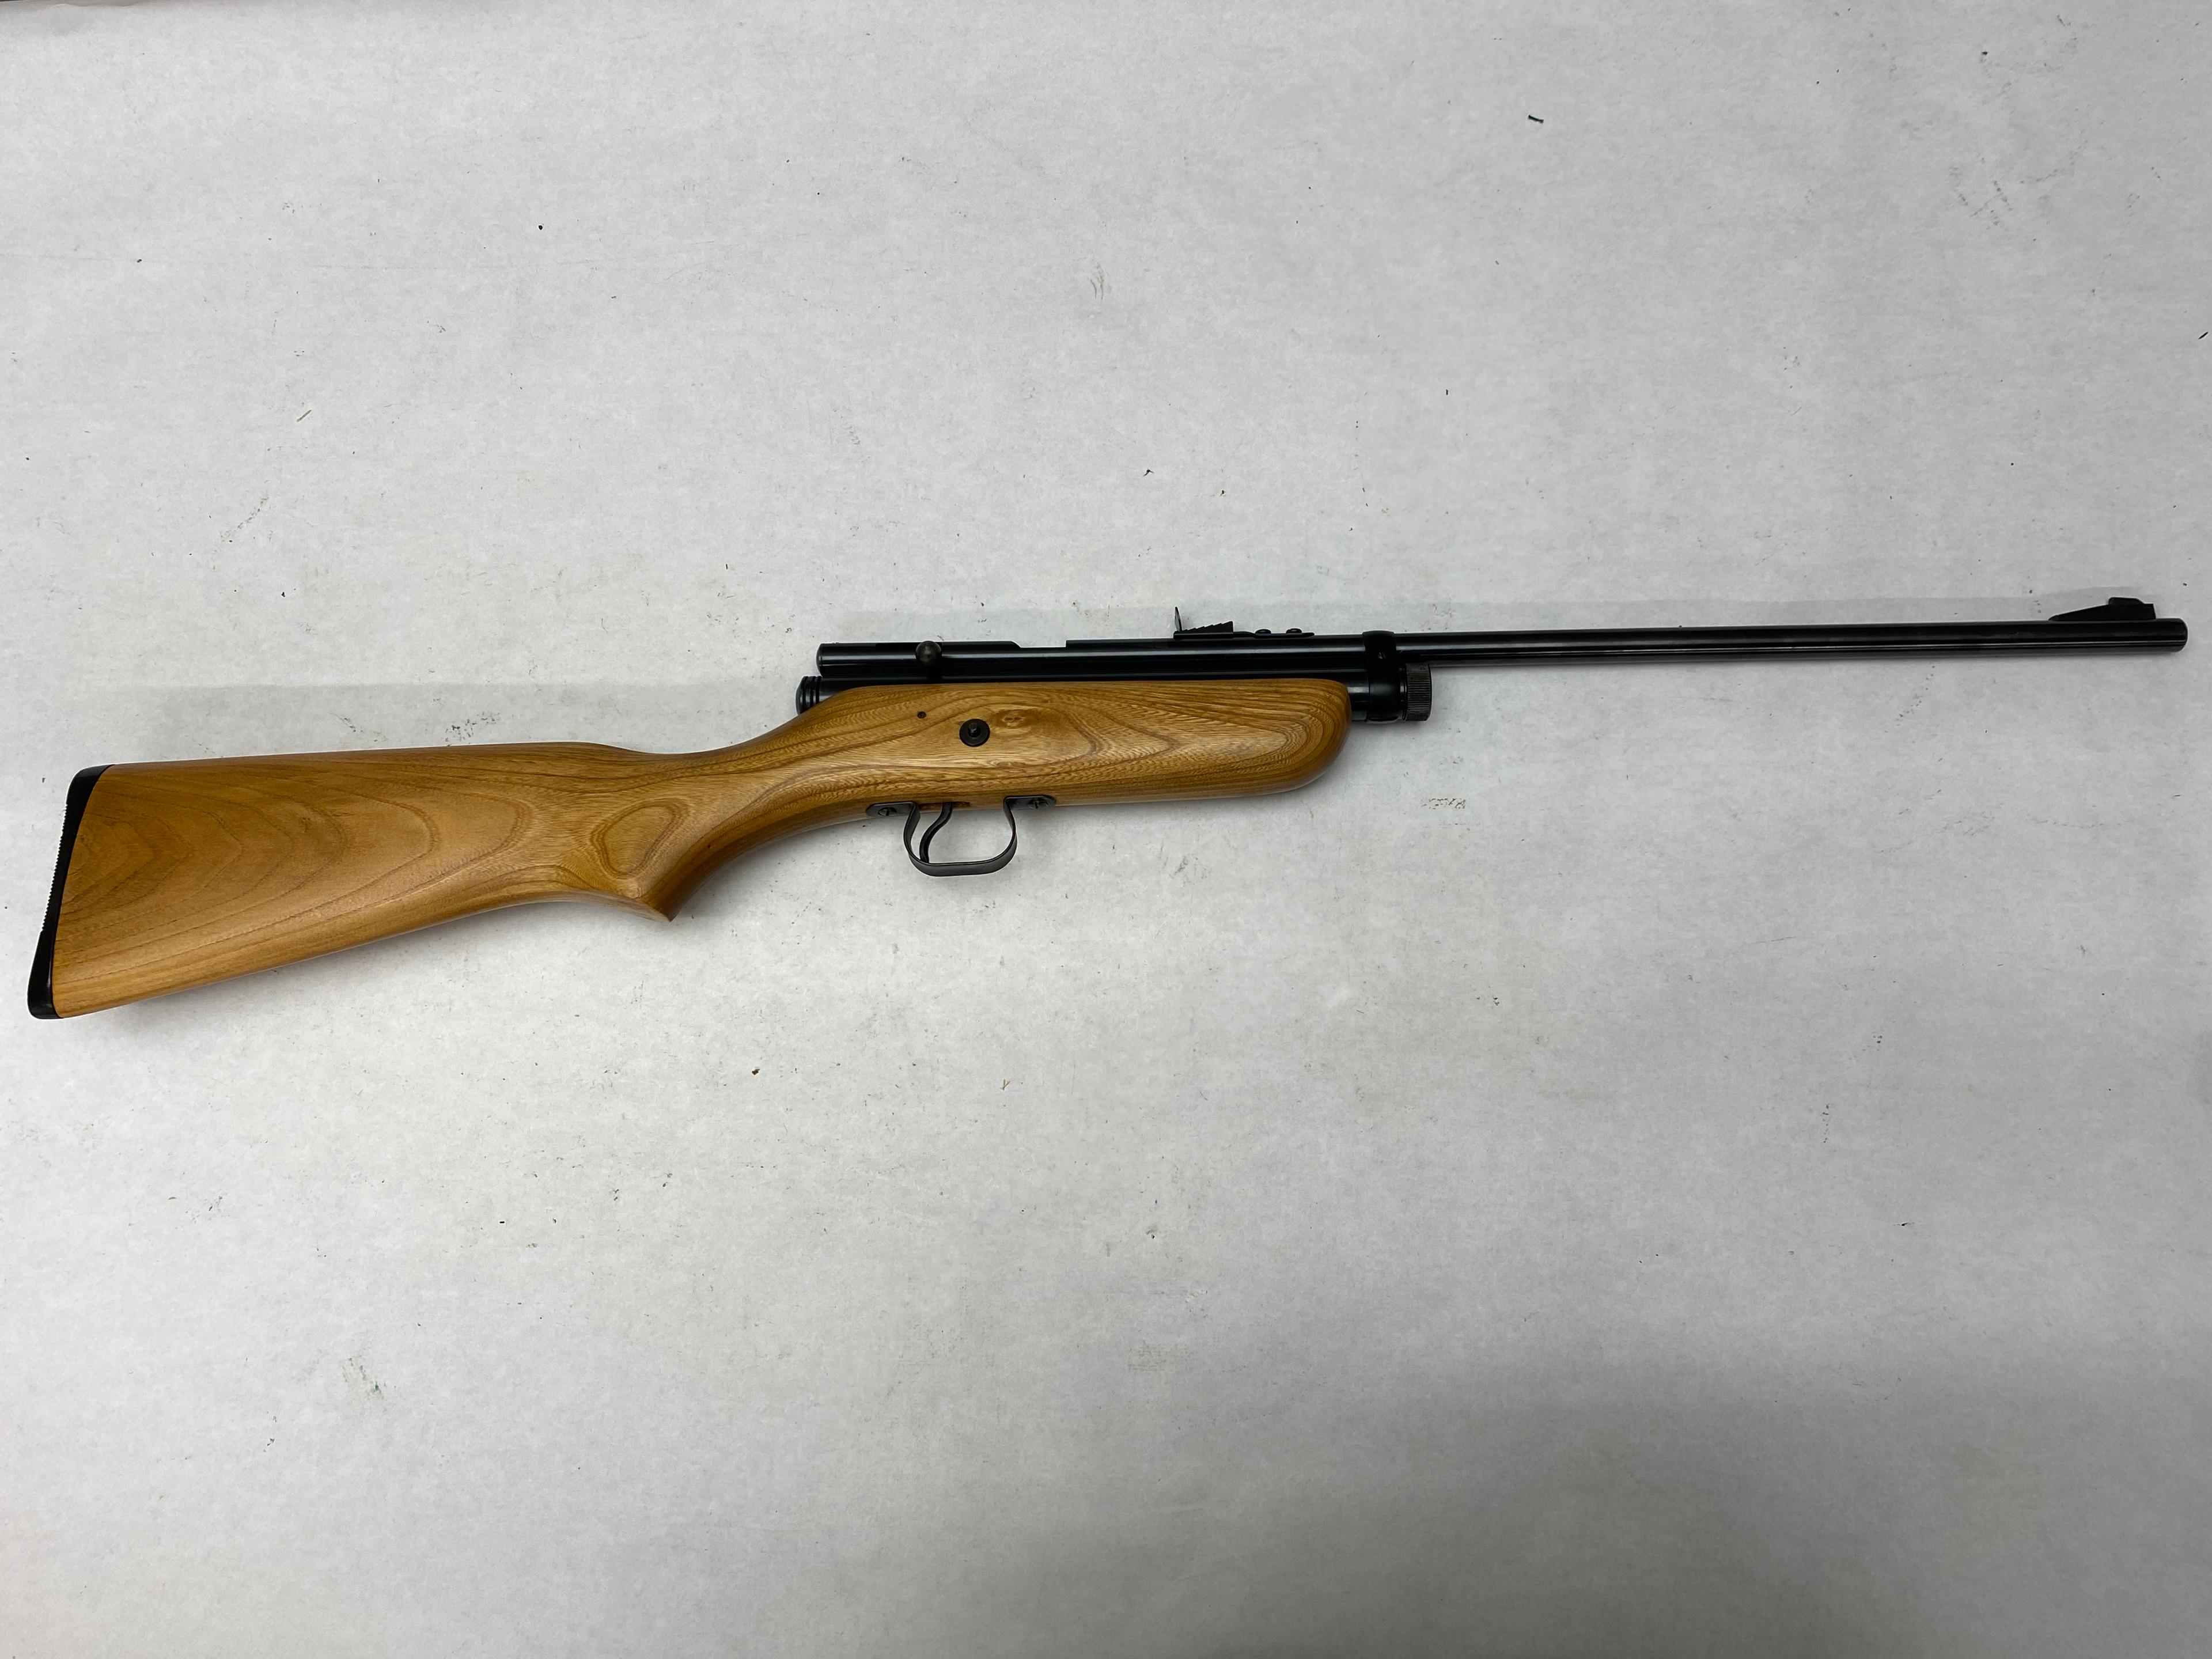 HAWTHORNE M180 .22CAL PELLET GUN